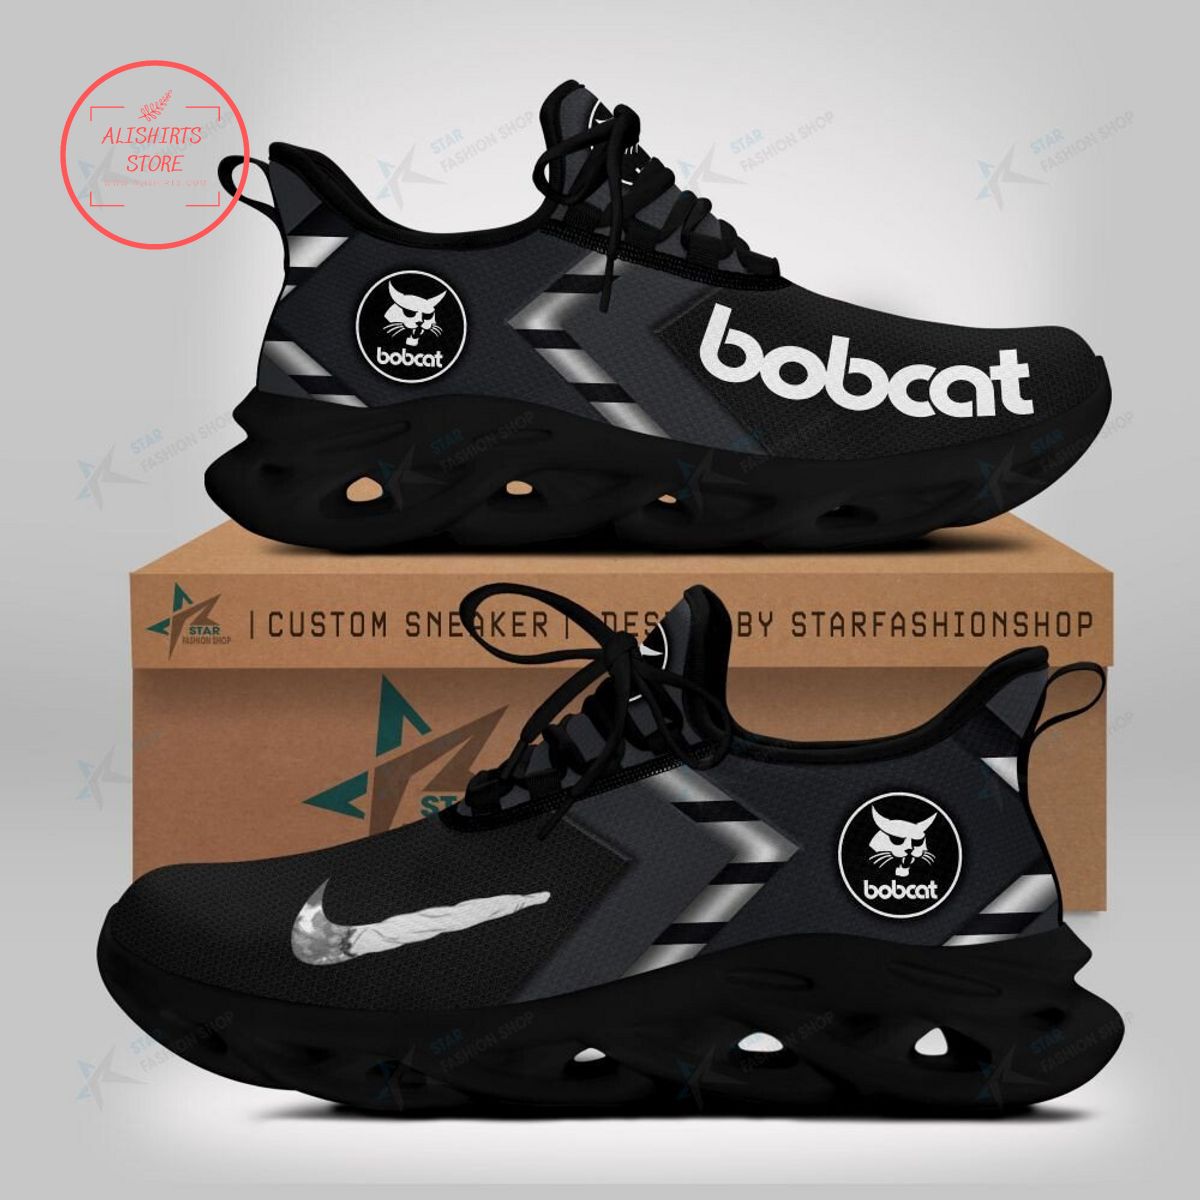 Bobcat Max Soul Sneaker Shoes